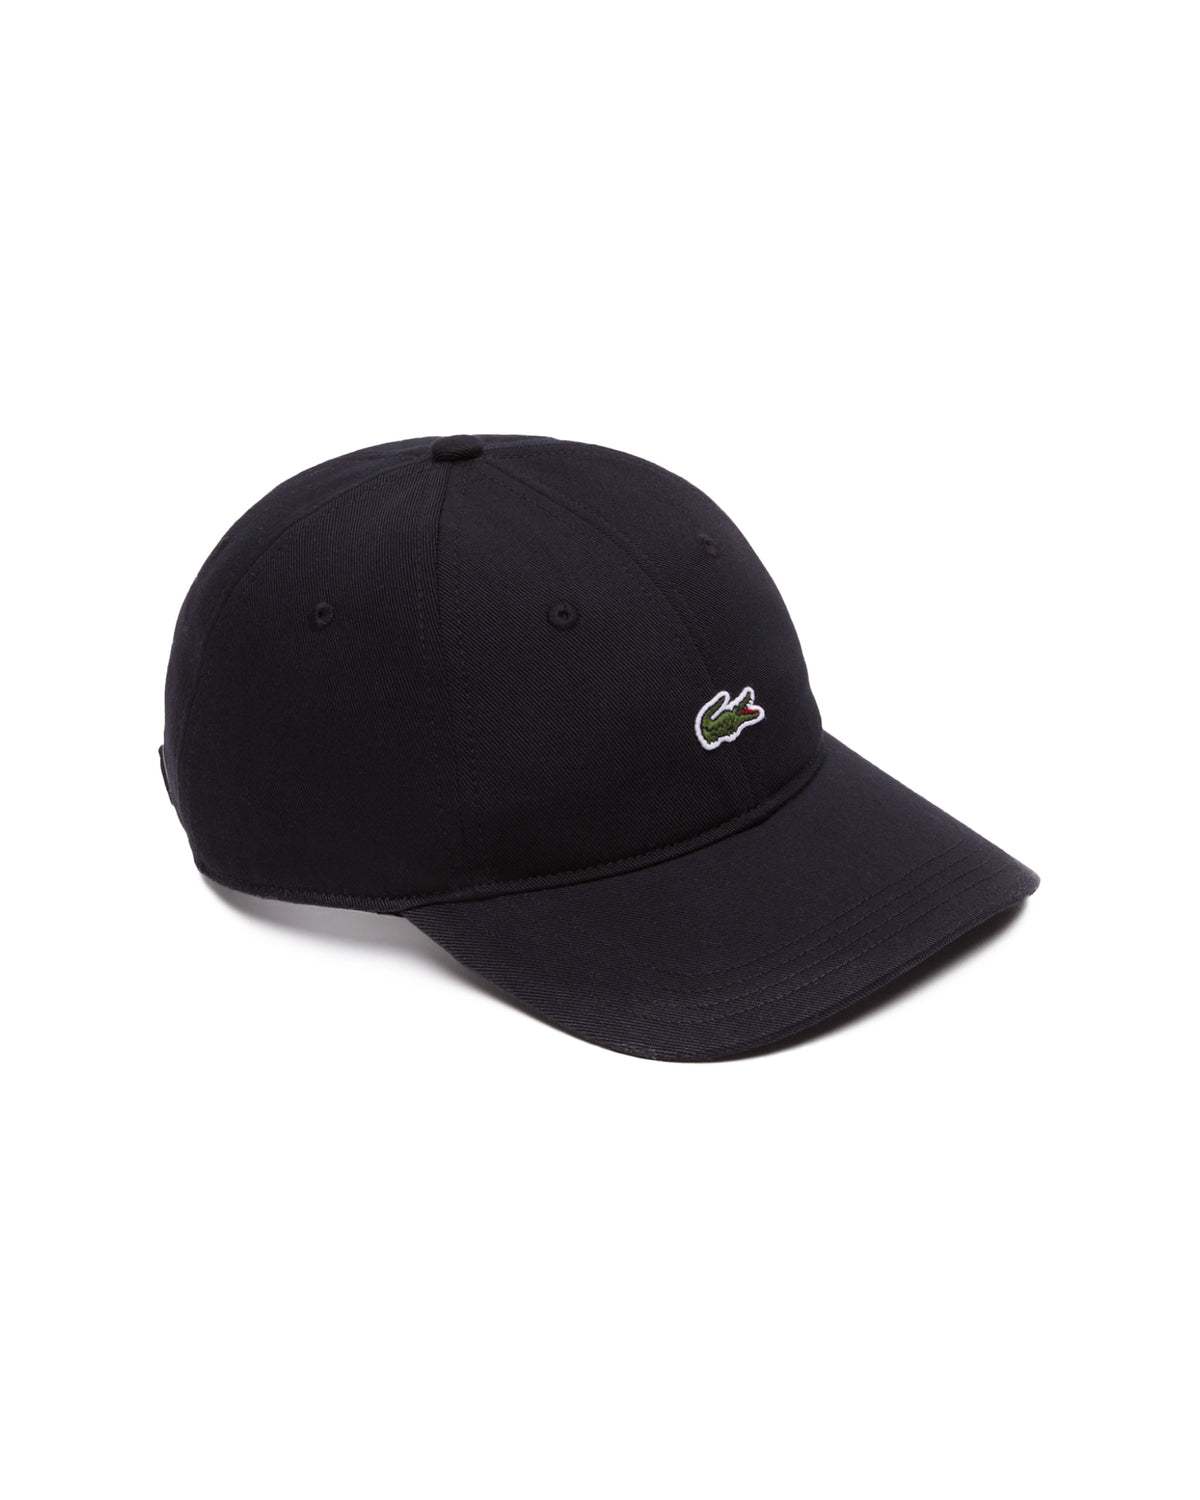 Lacoste Classic Logo Black Hat